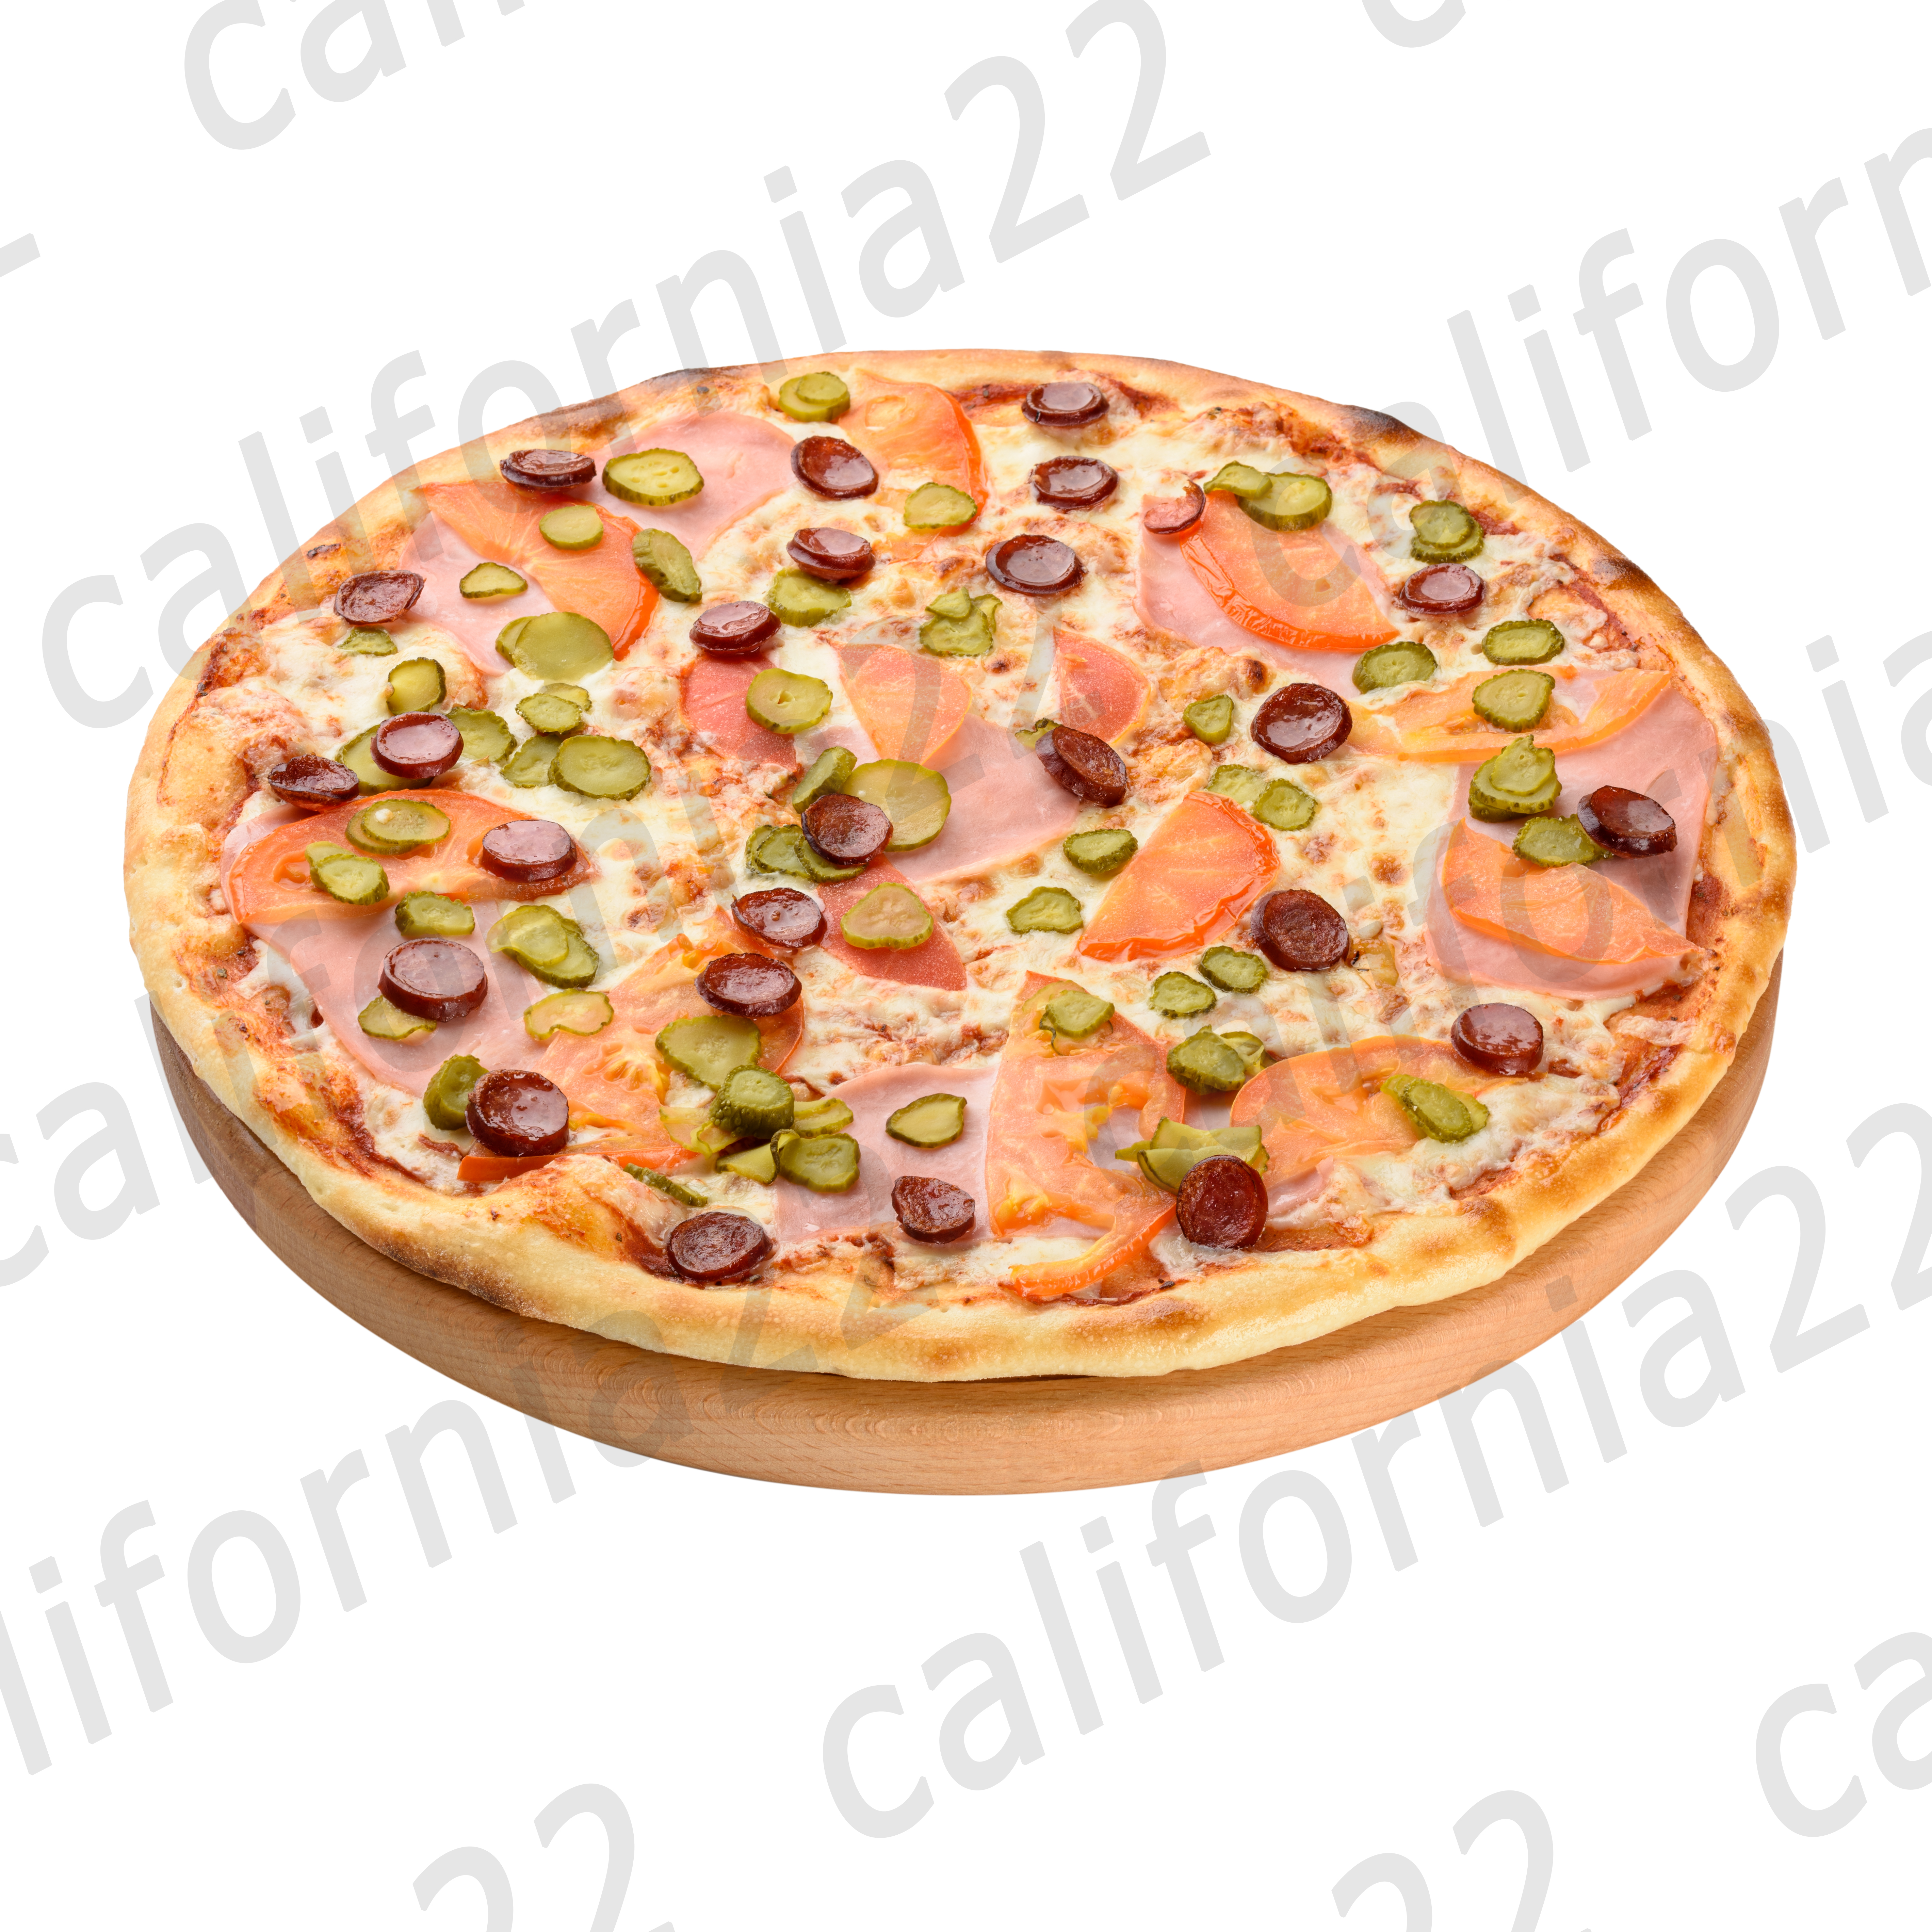 пицца охотничья бжу фото 112